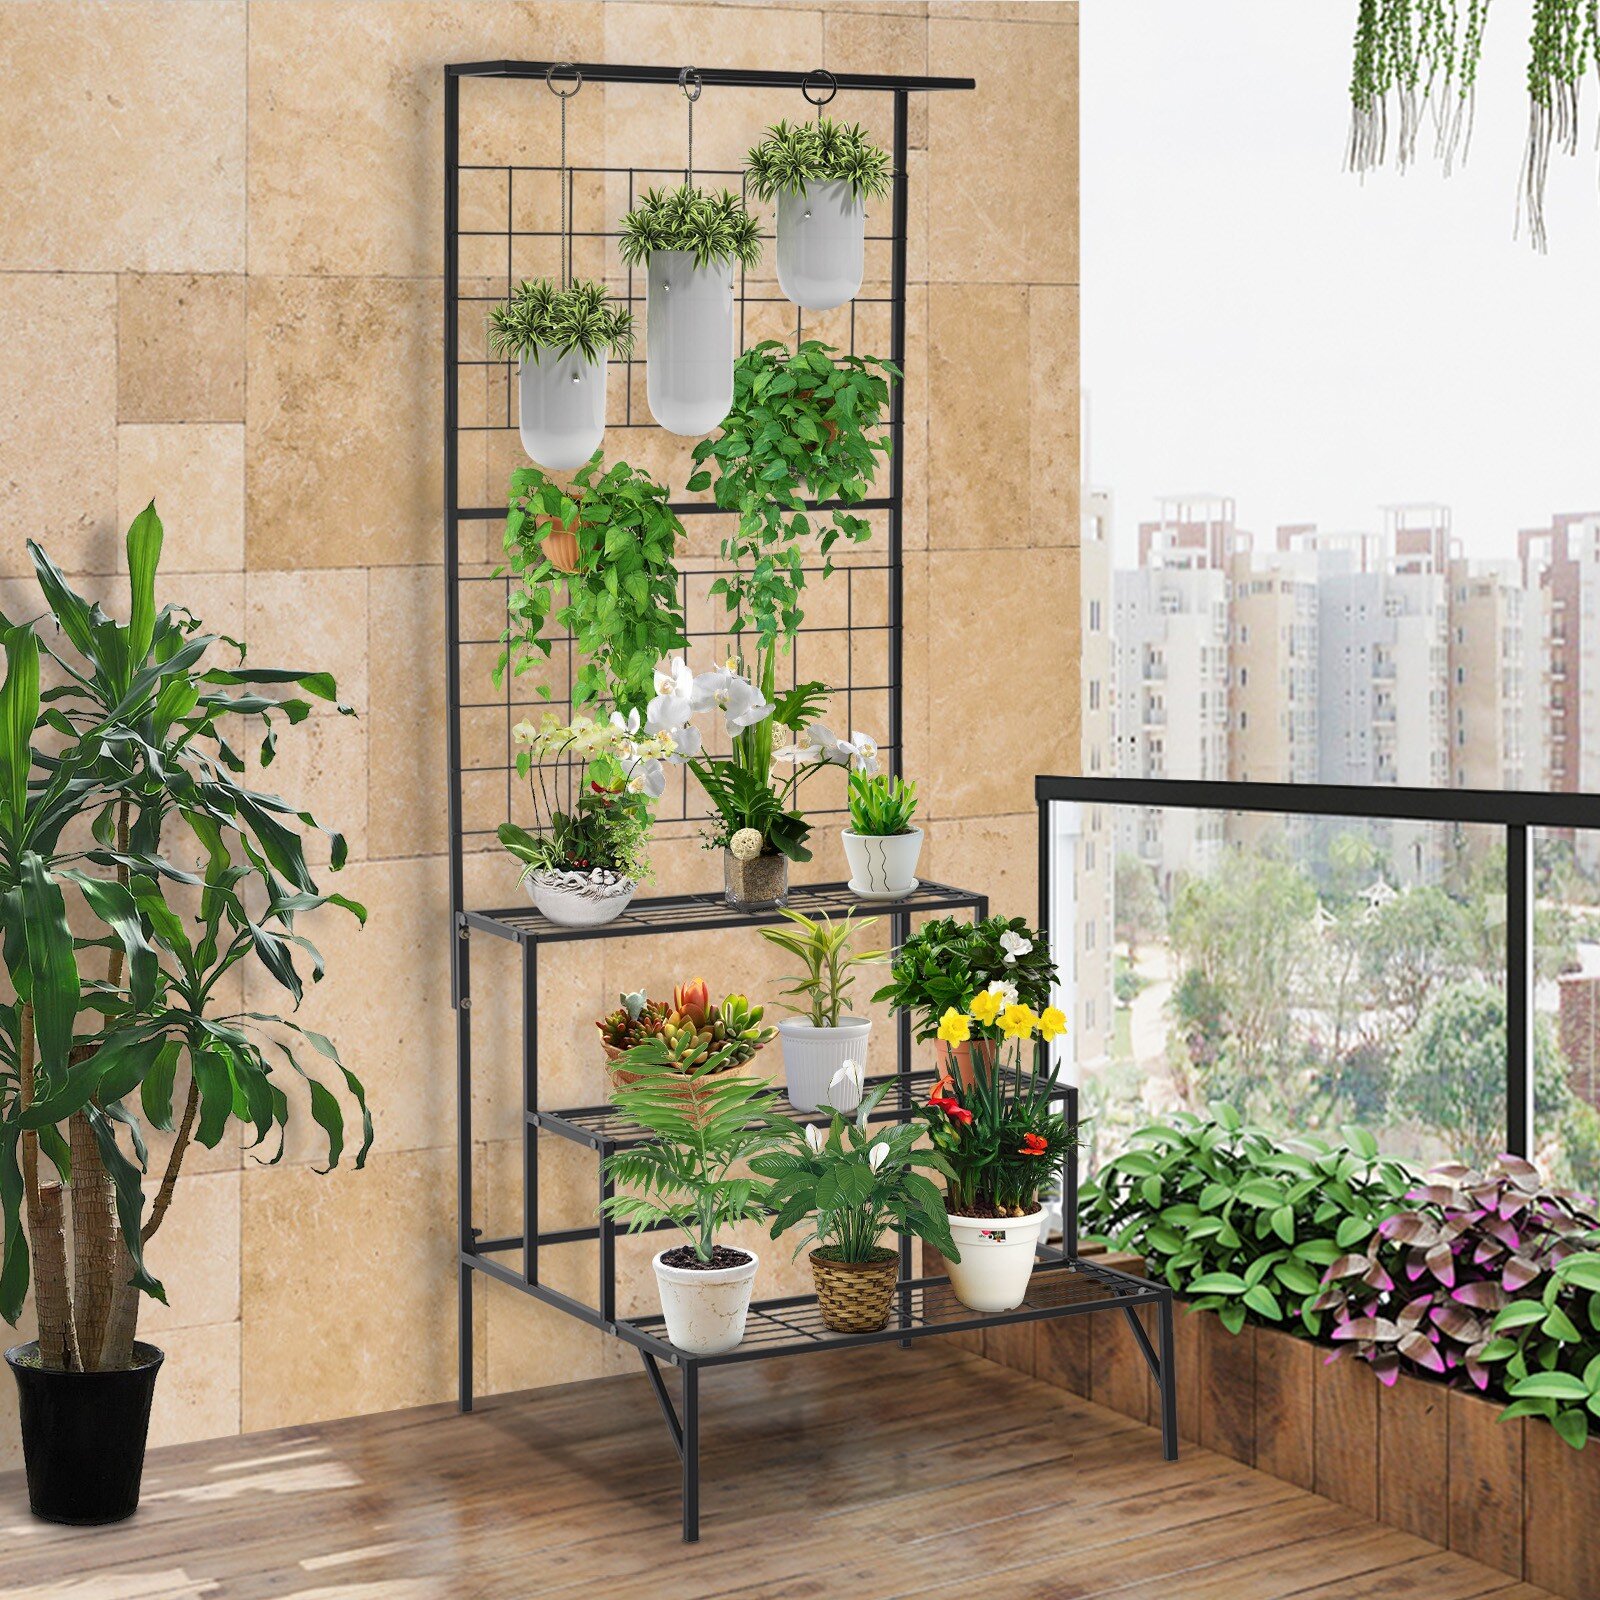 Details about   3 Tier Metal Plant Stand Flower Pot Holder Shelf Rack Garden Patio Home Outdoor